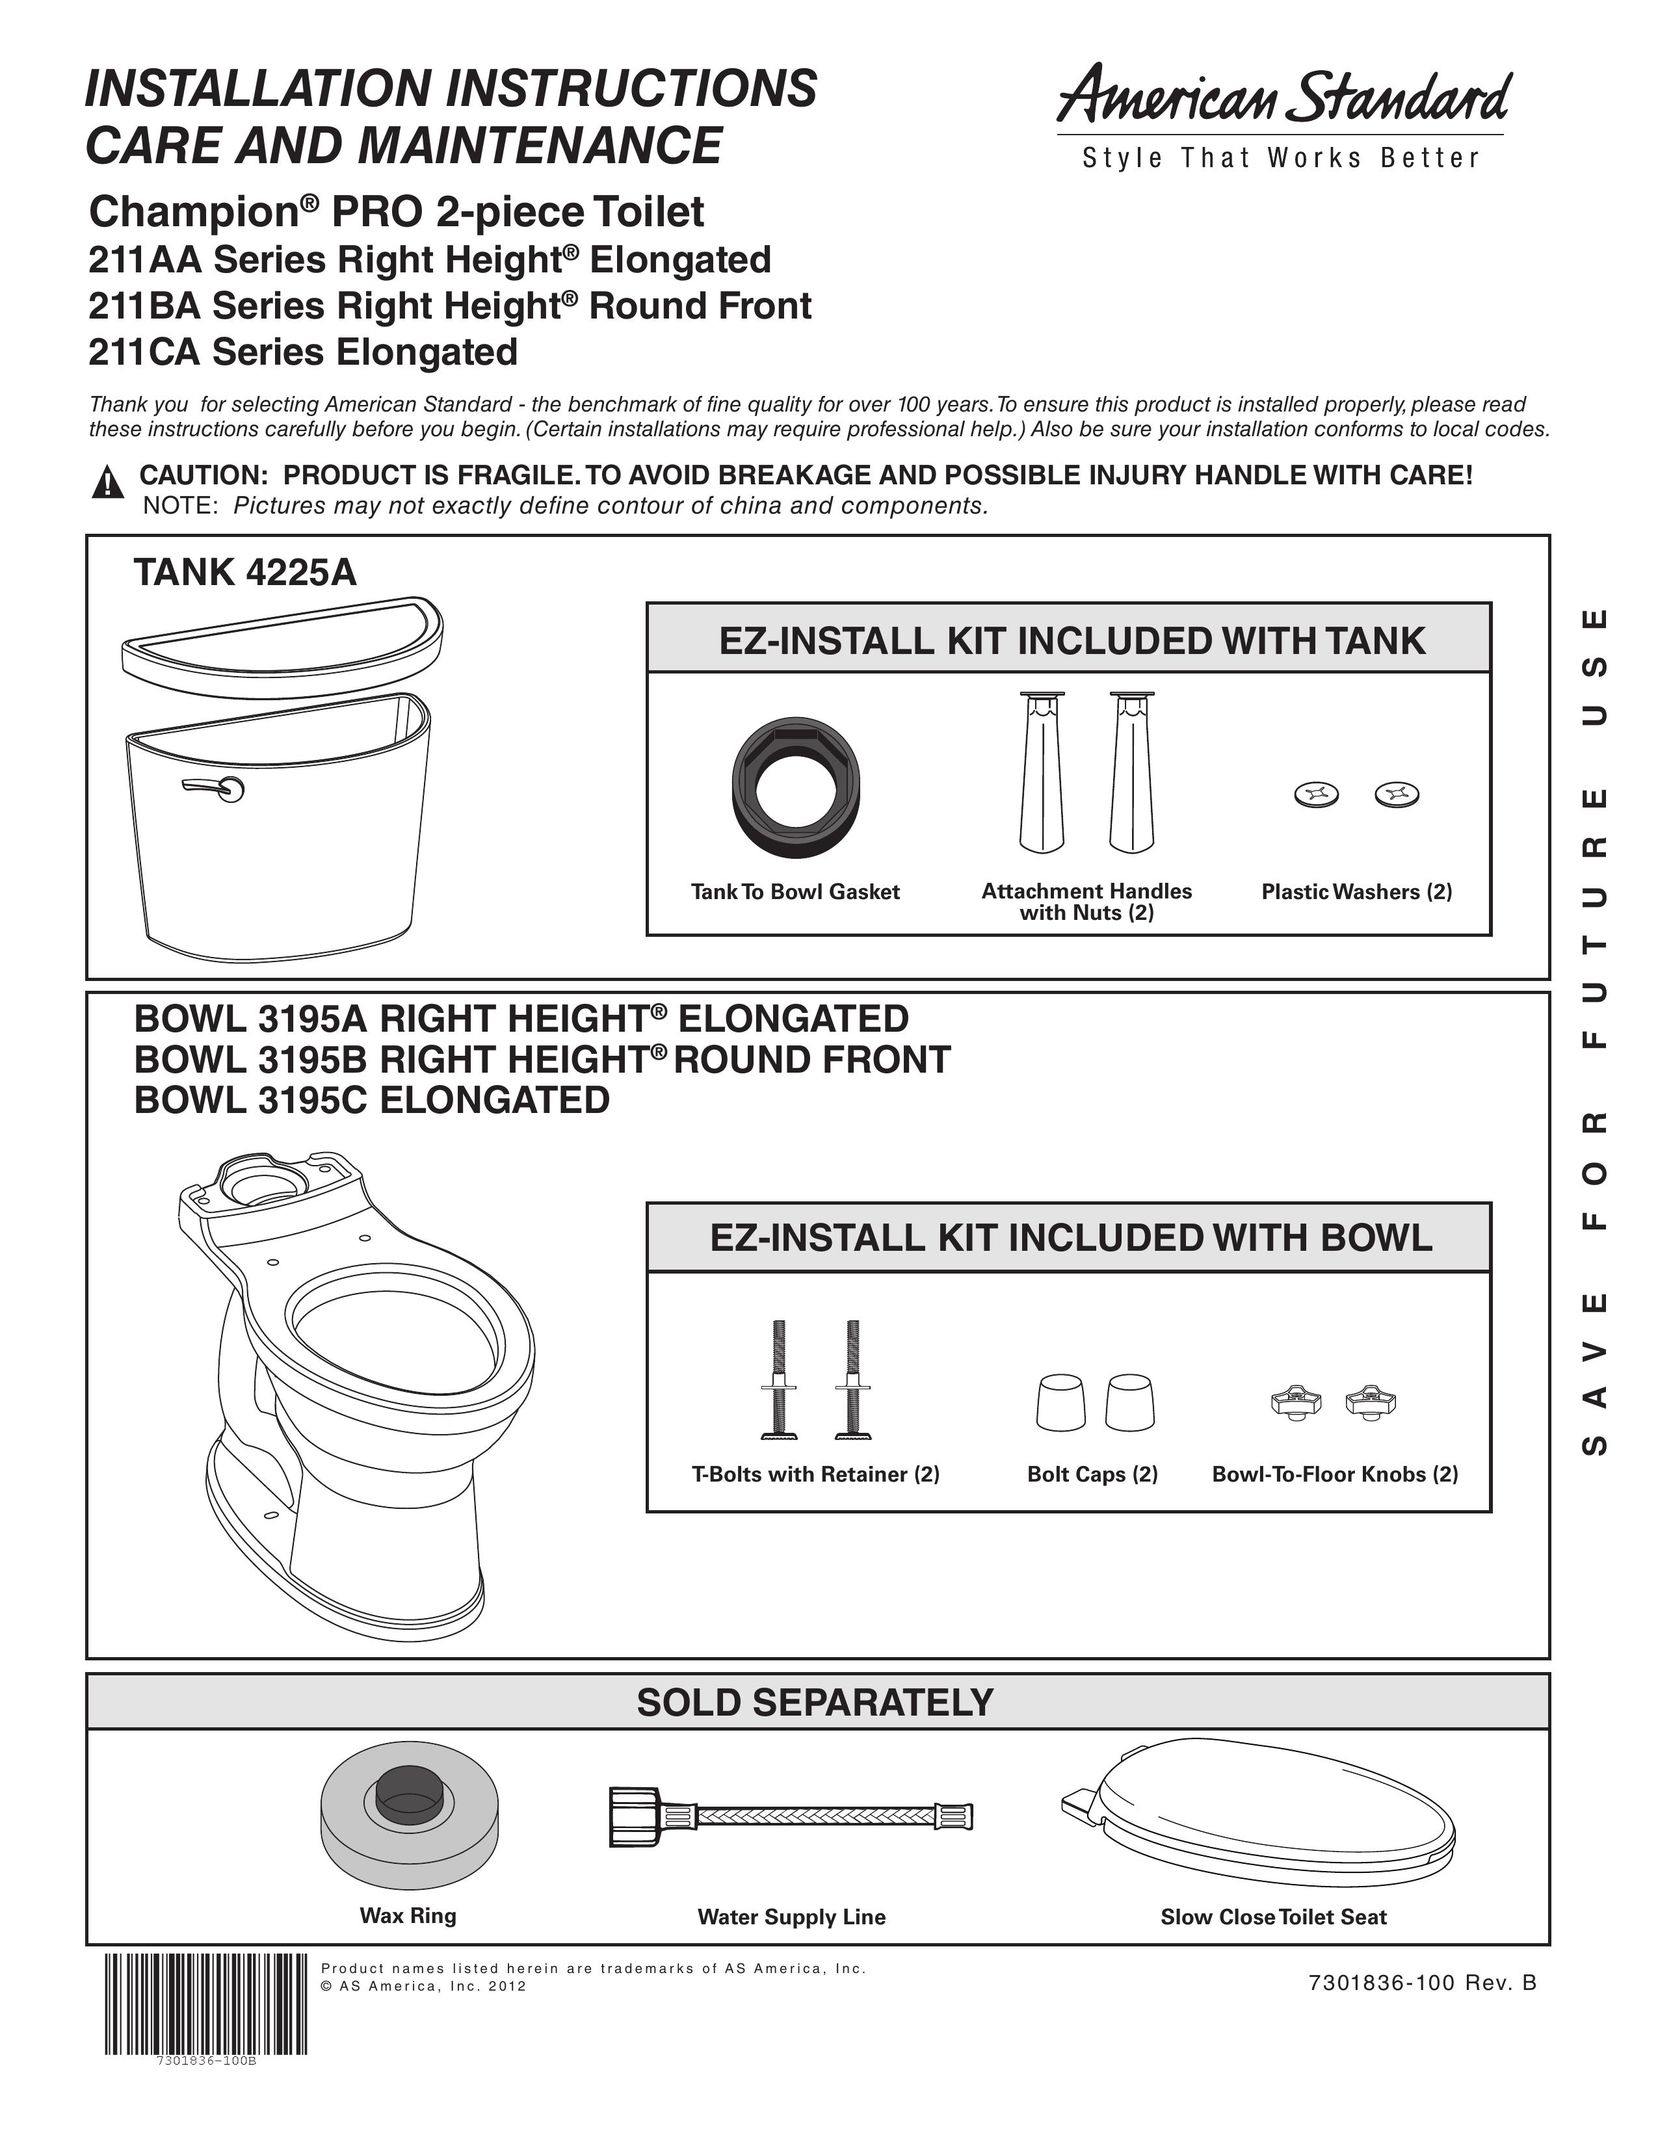 American Standard 211AA Plumbing Product User Manual